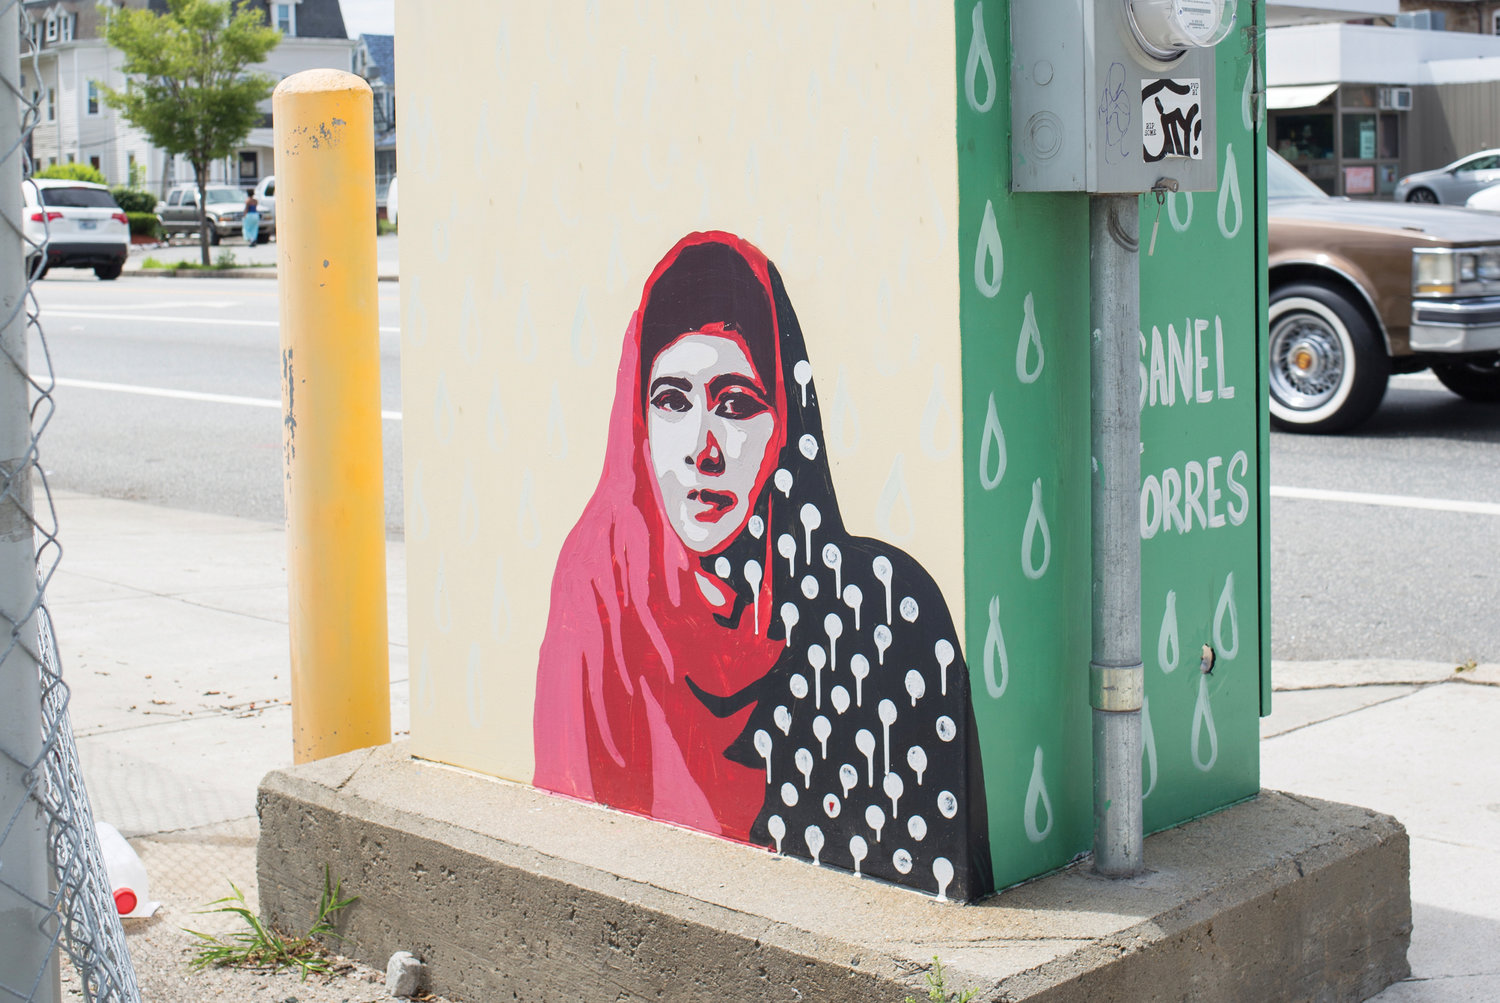 Malala’s polka dots drip to 
convey imperfection